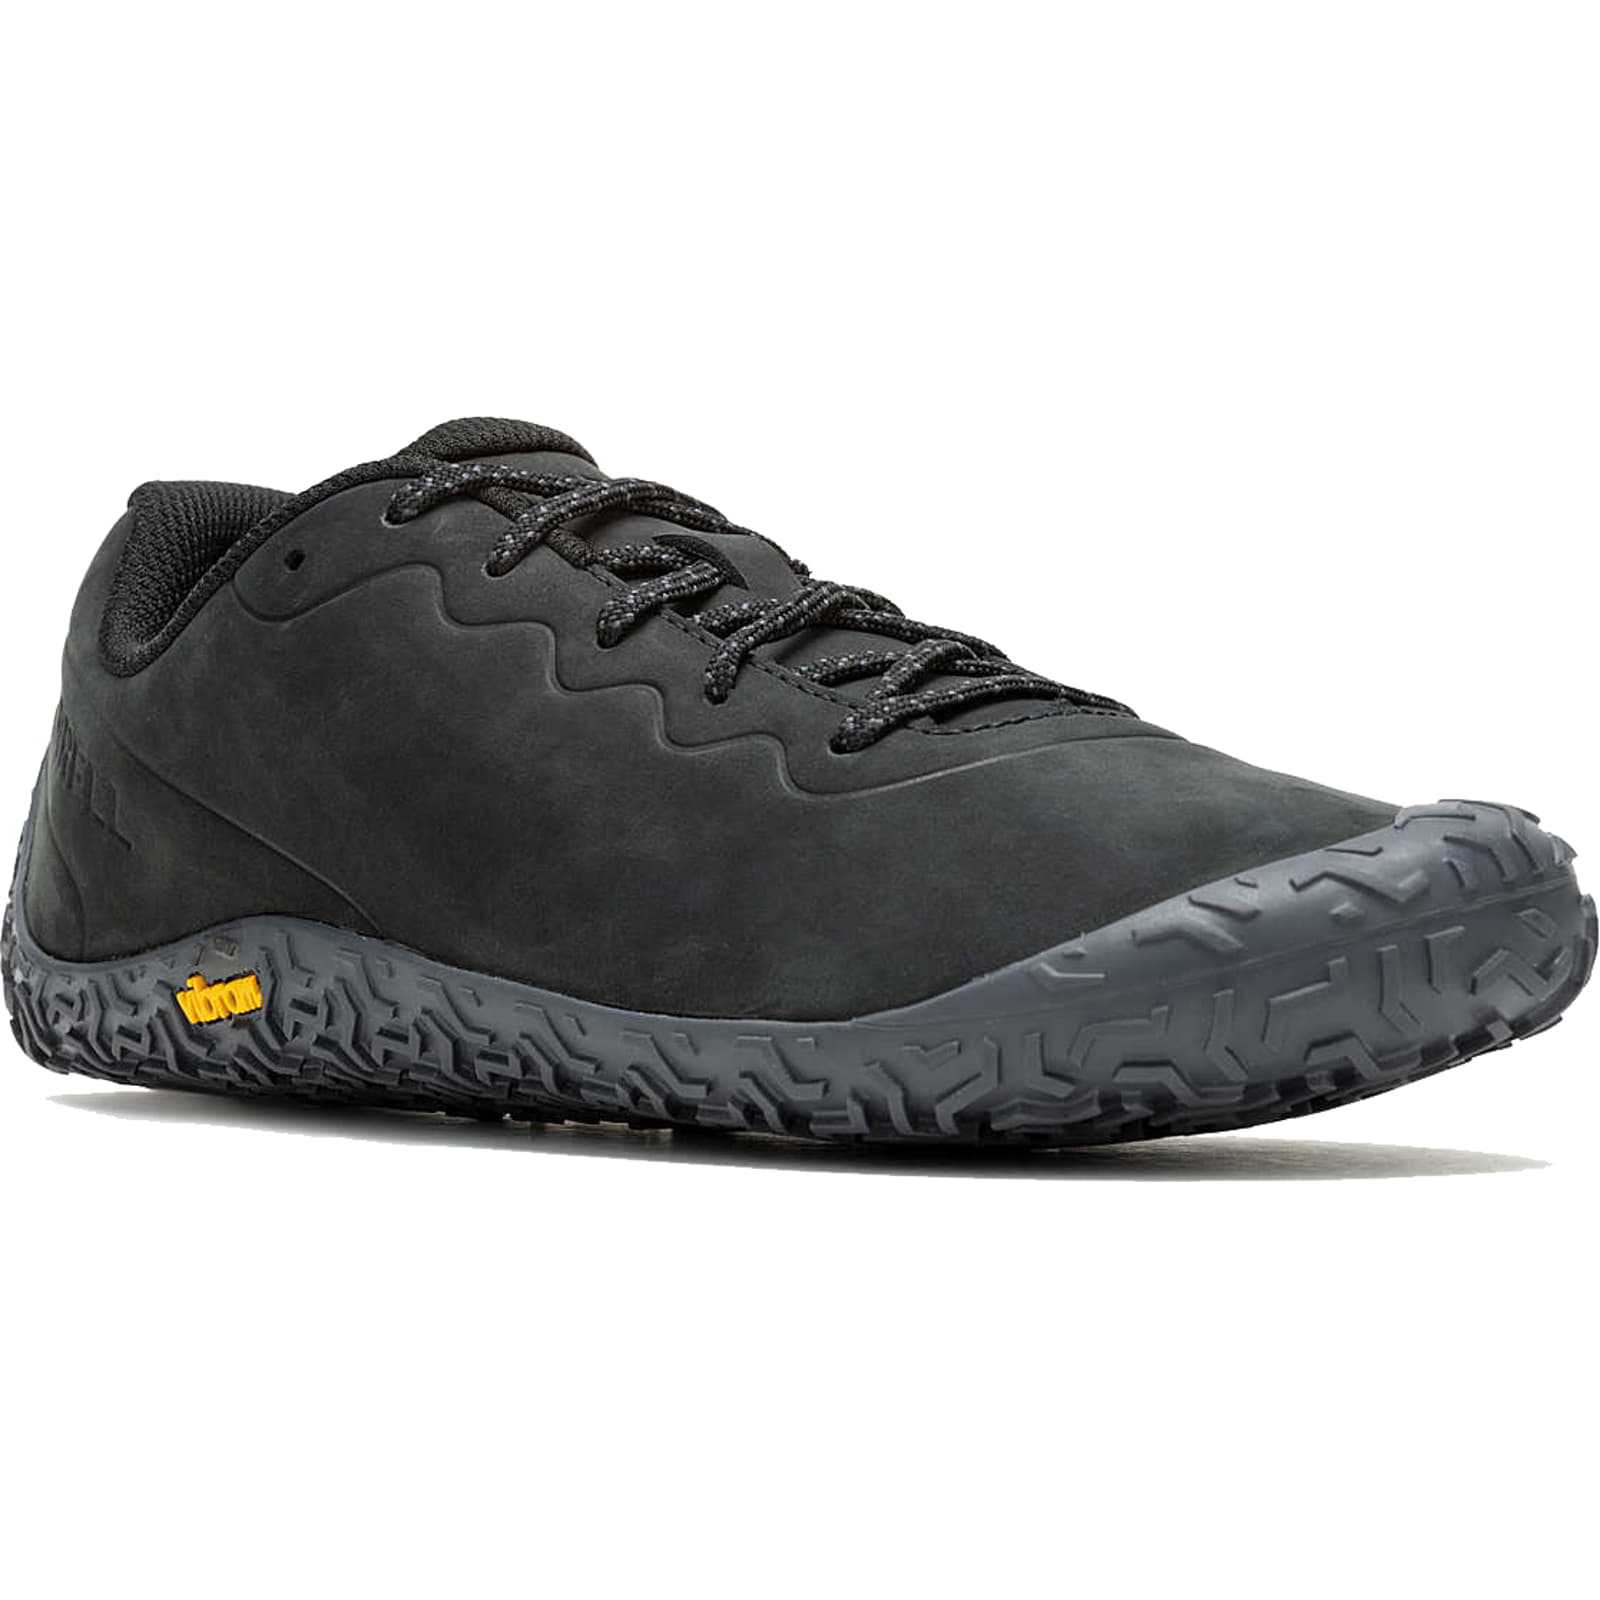 Merrell Men's Vapor Glove 6 Leather Barefoot Running Shoes Trainers - UK 9.5